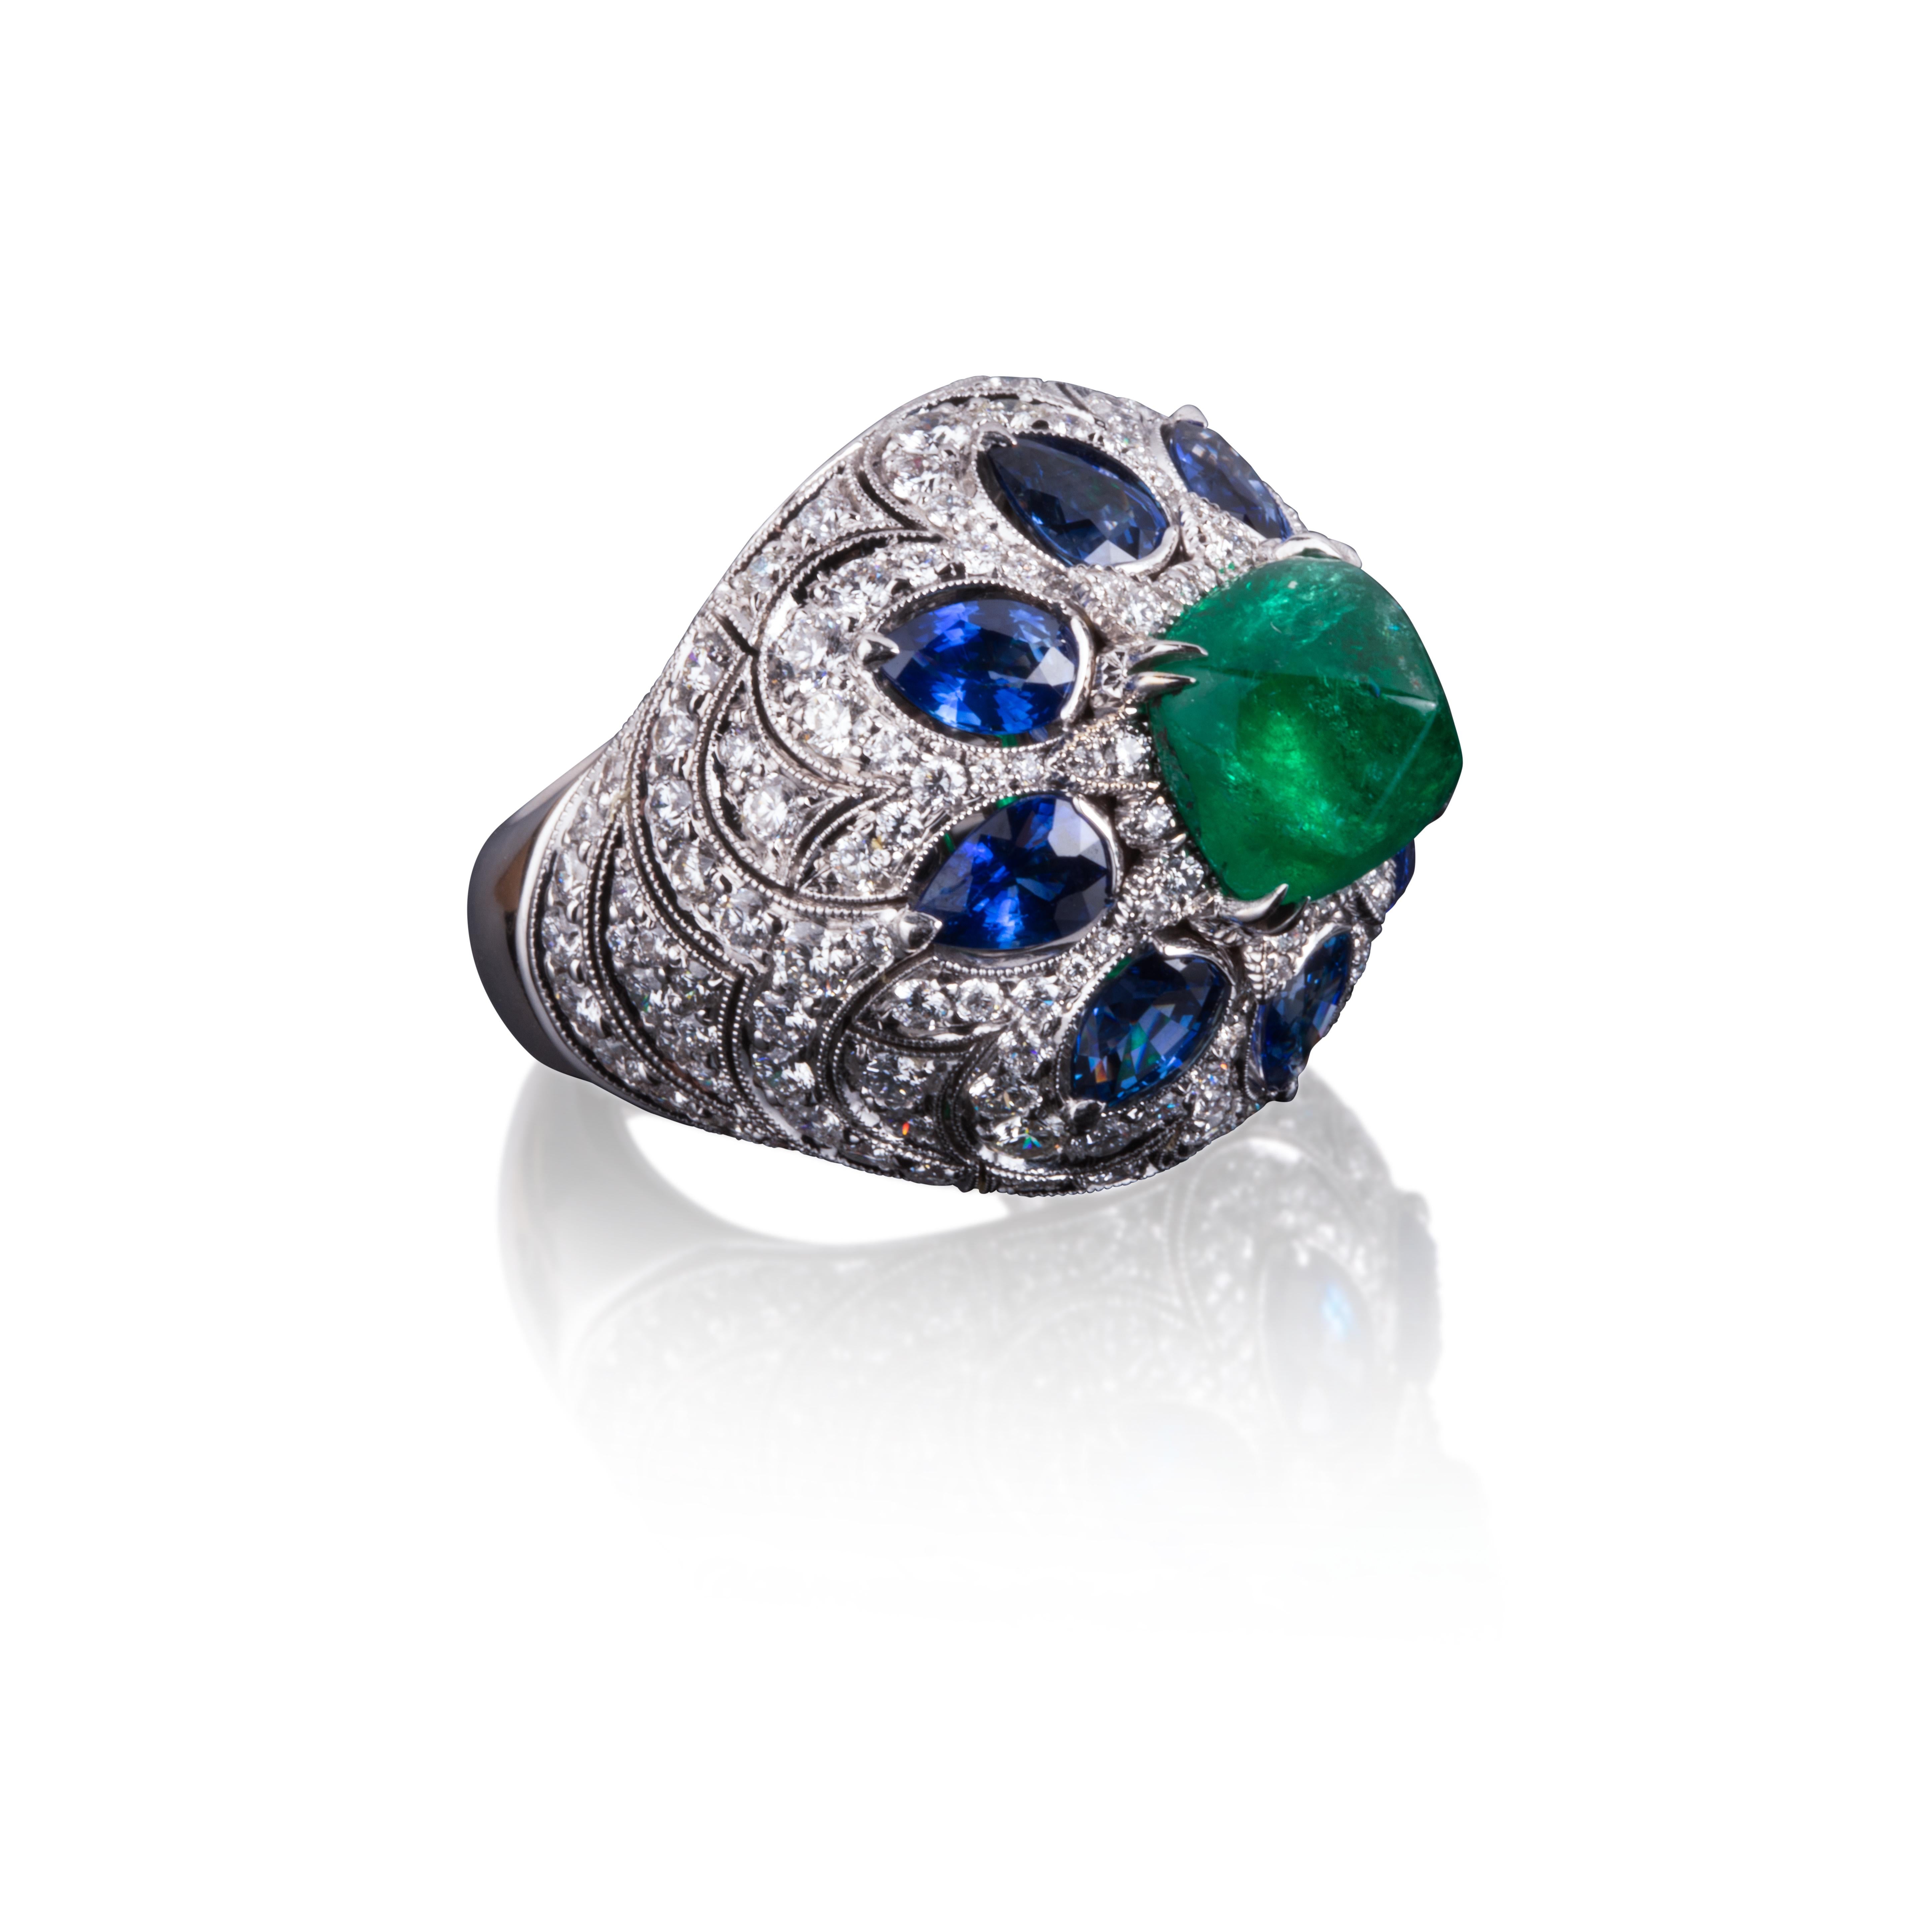 Cushion Cut Veschetti 18 Kt White Gold Zambian Emerald, Sapphire and Diamond Ring For Sale